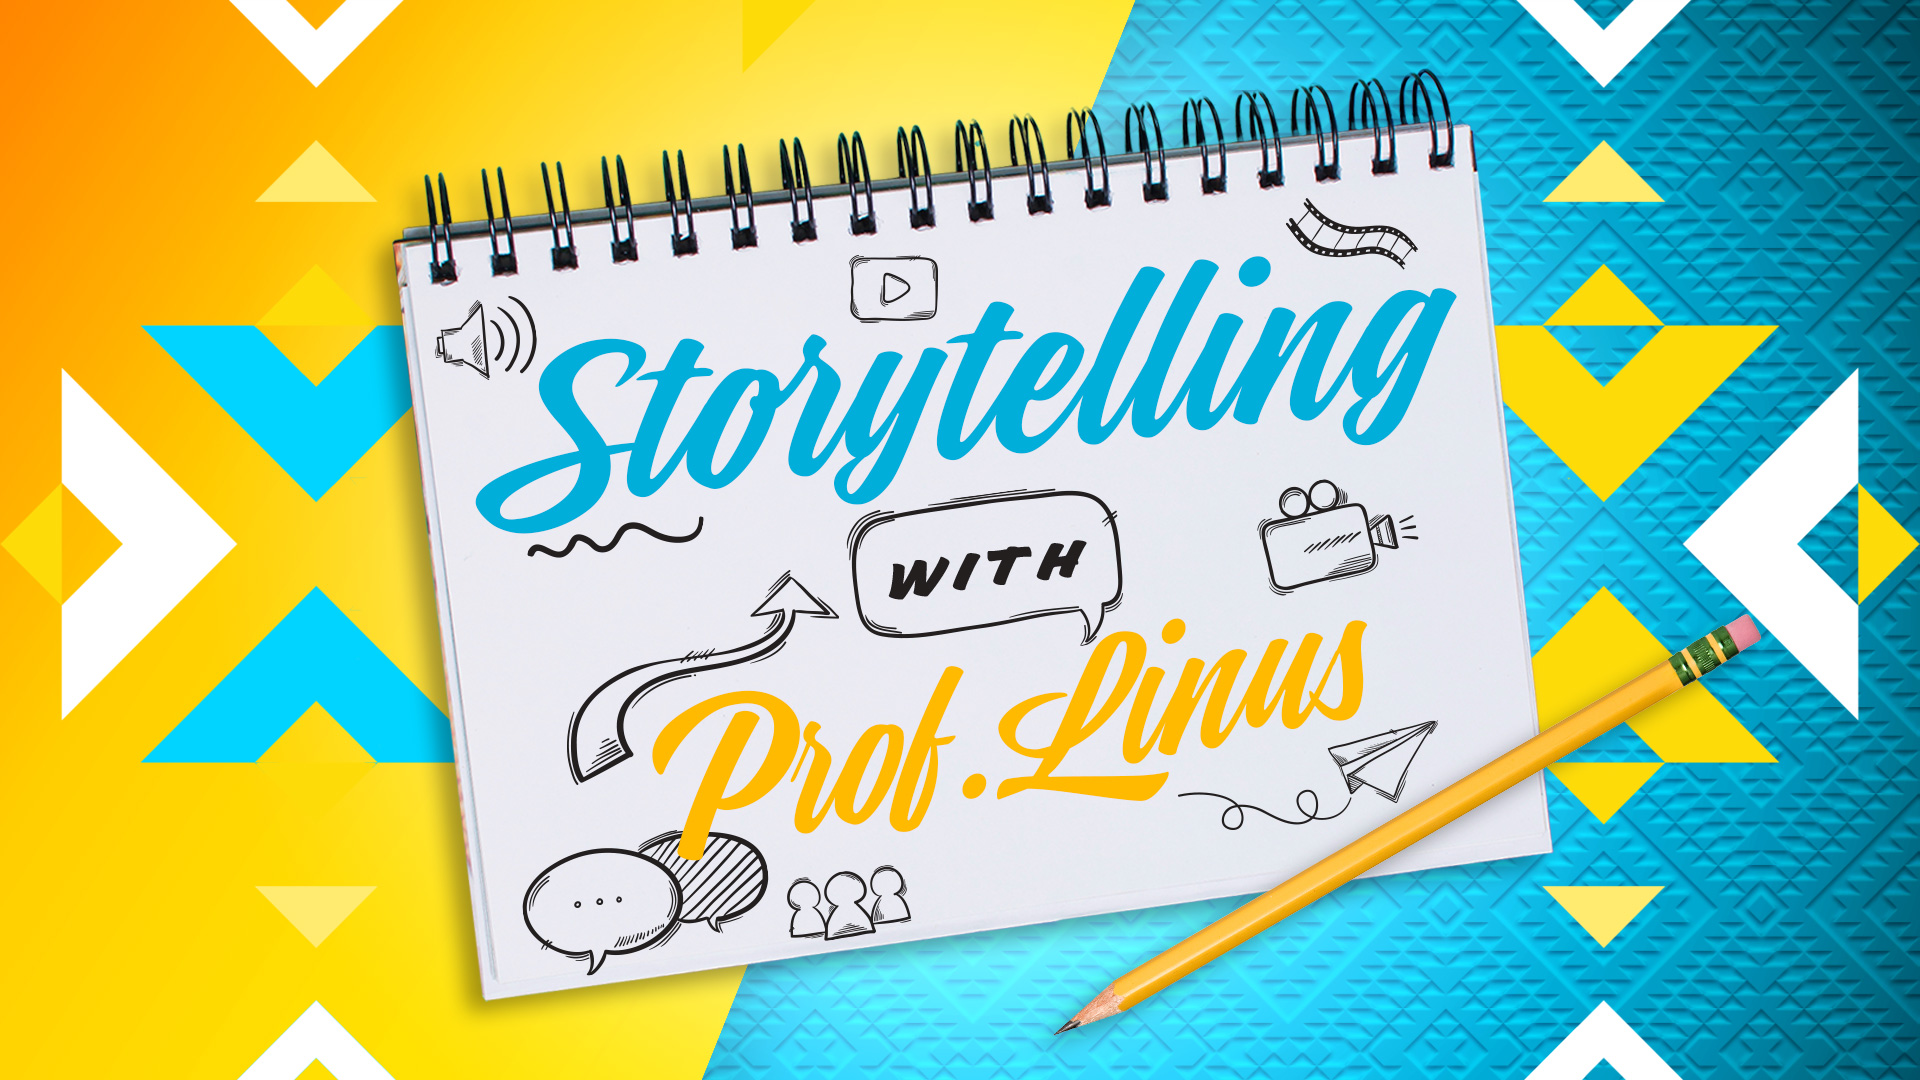 Storytelling masterclass banner